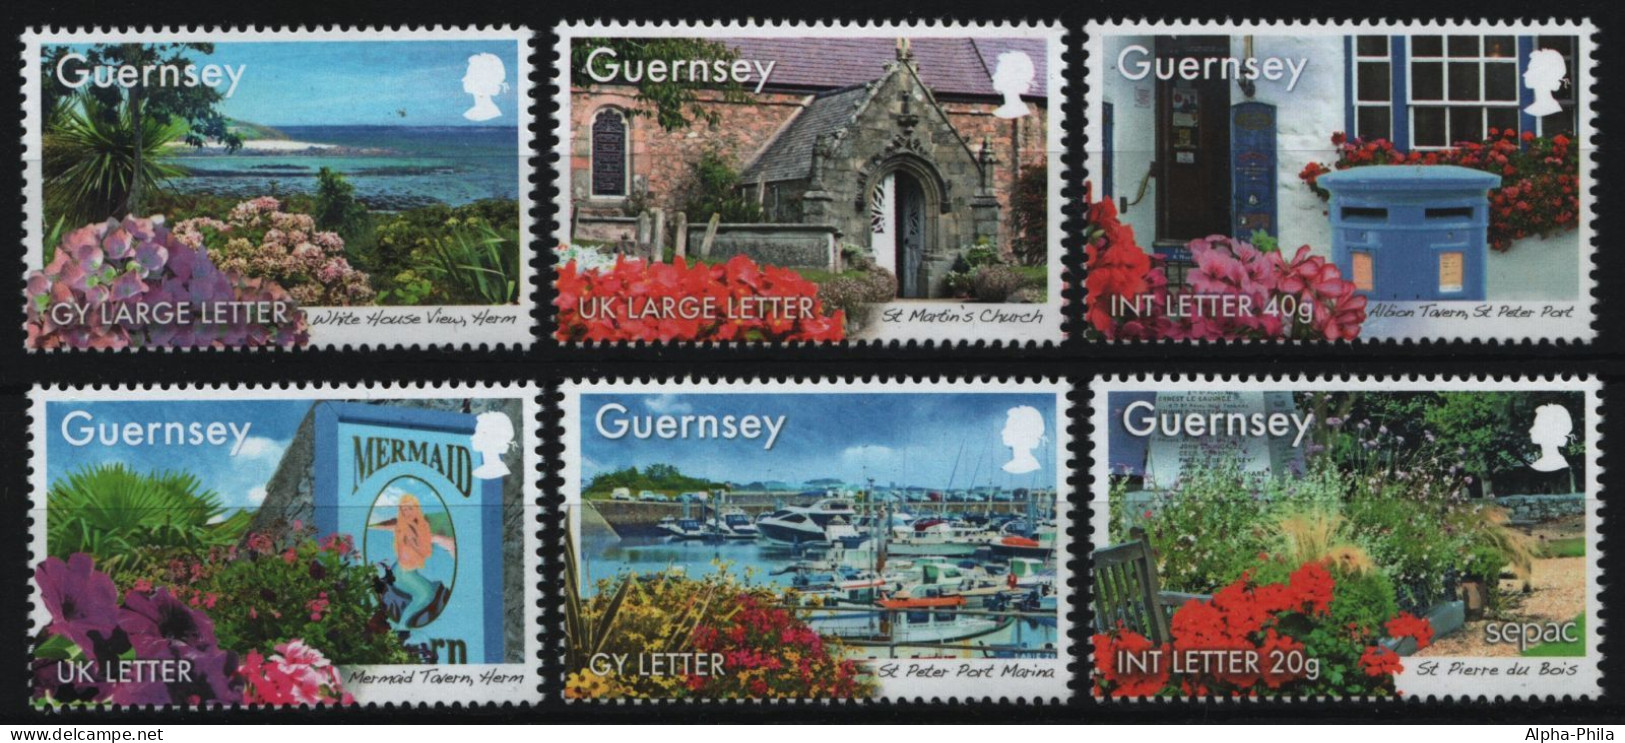 Guernsey 2014 - Mi-Nr. 1468-1473 ** - MNH - Tourismus - Guernesey